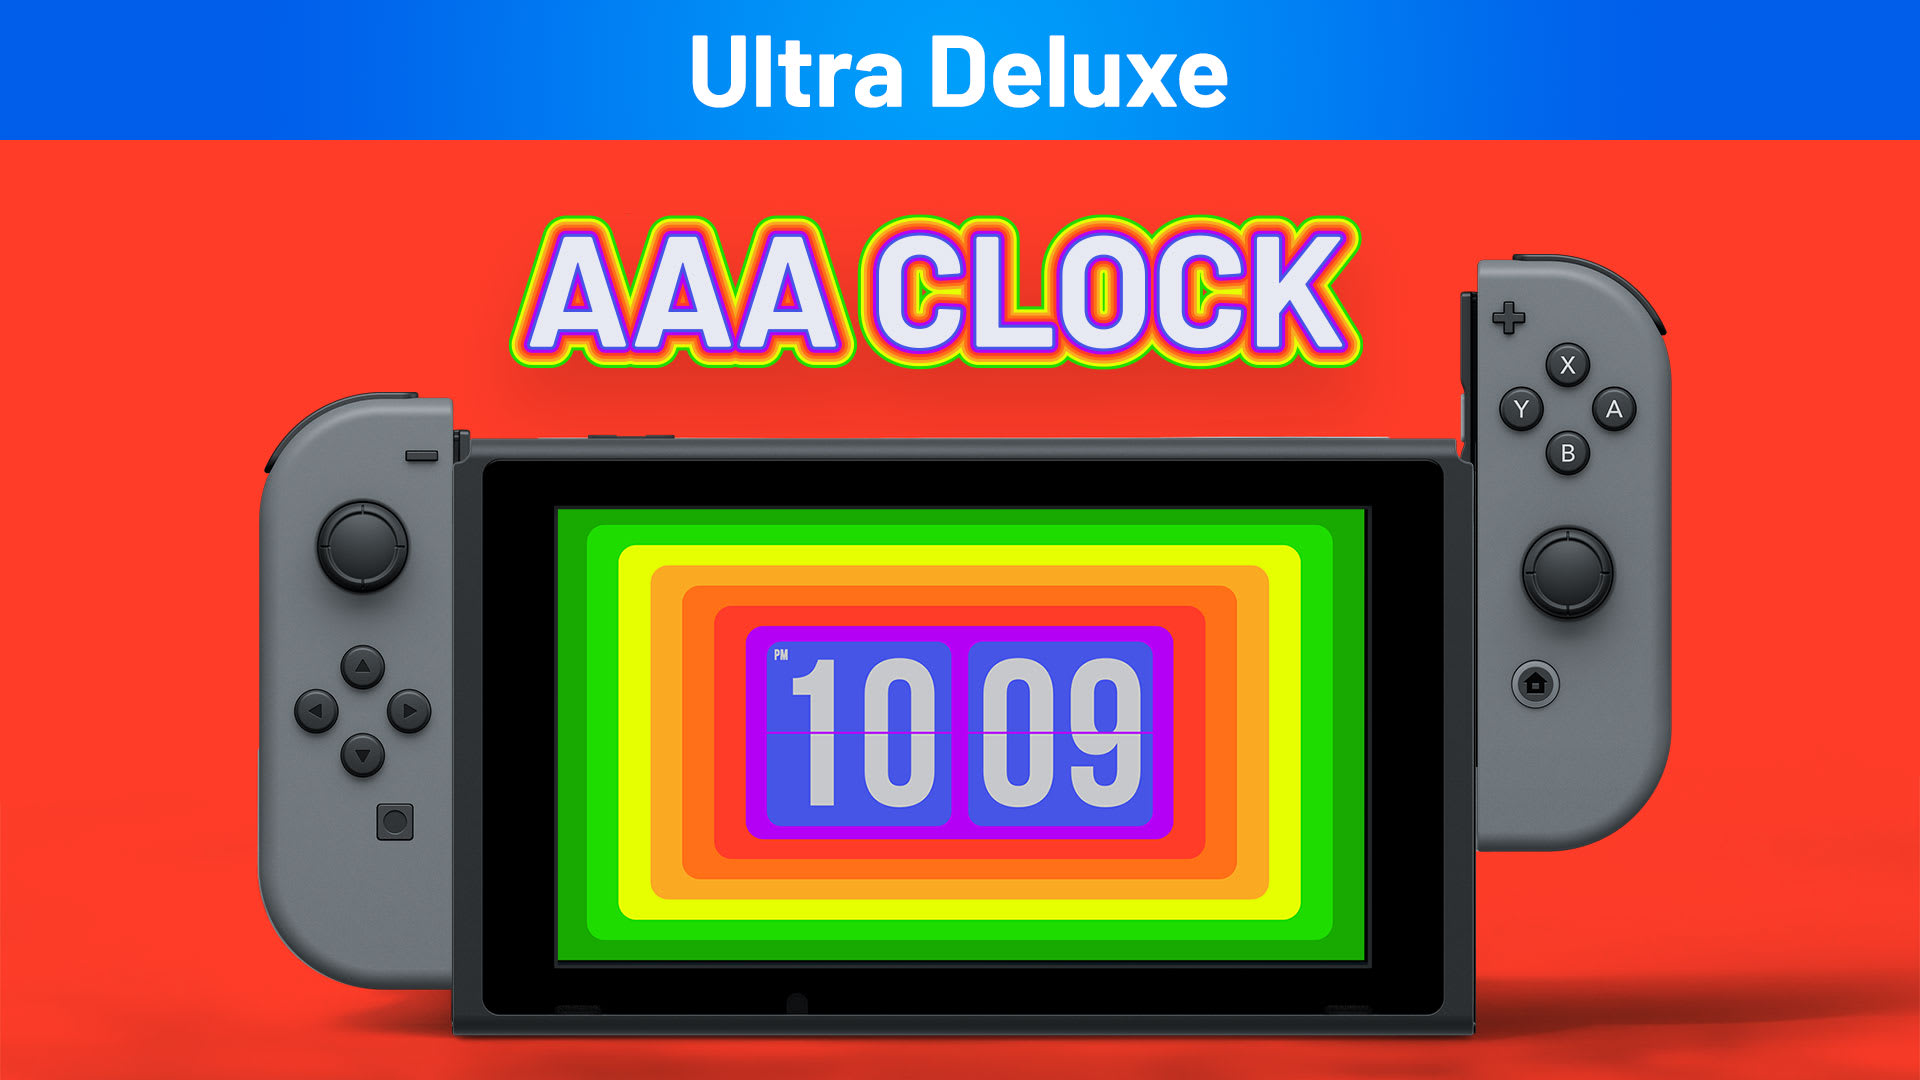 AAA Clock Ultra Deluxe